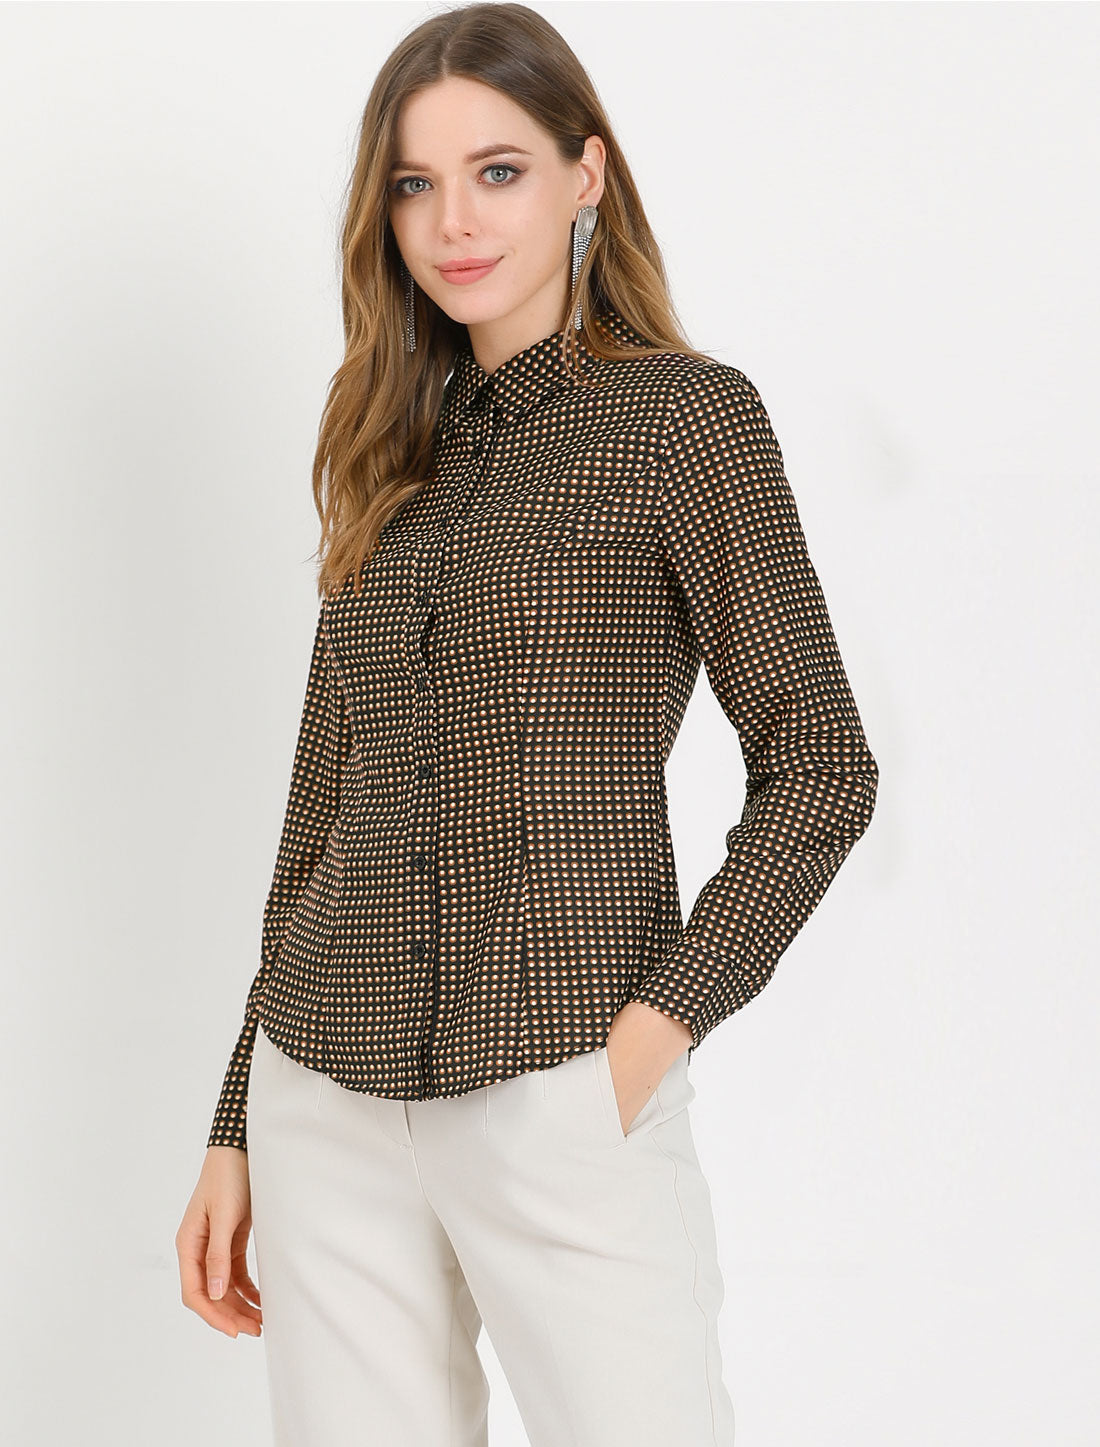 Allegra K Office Work Point Collar Polka Dots Printed Blouse Button Down Shirt